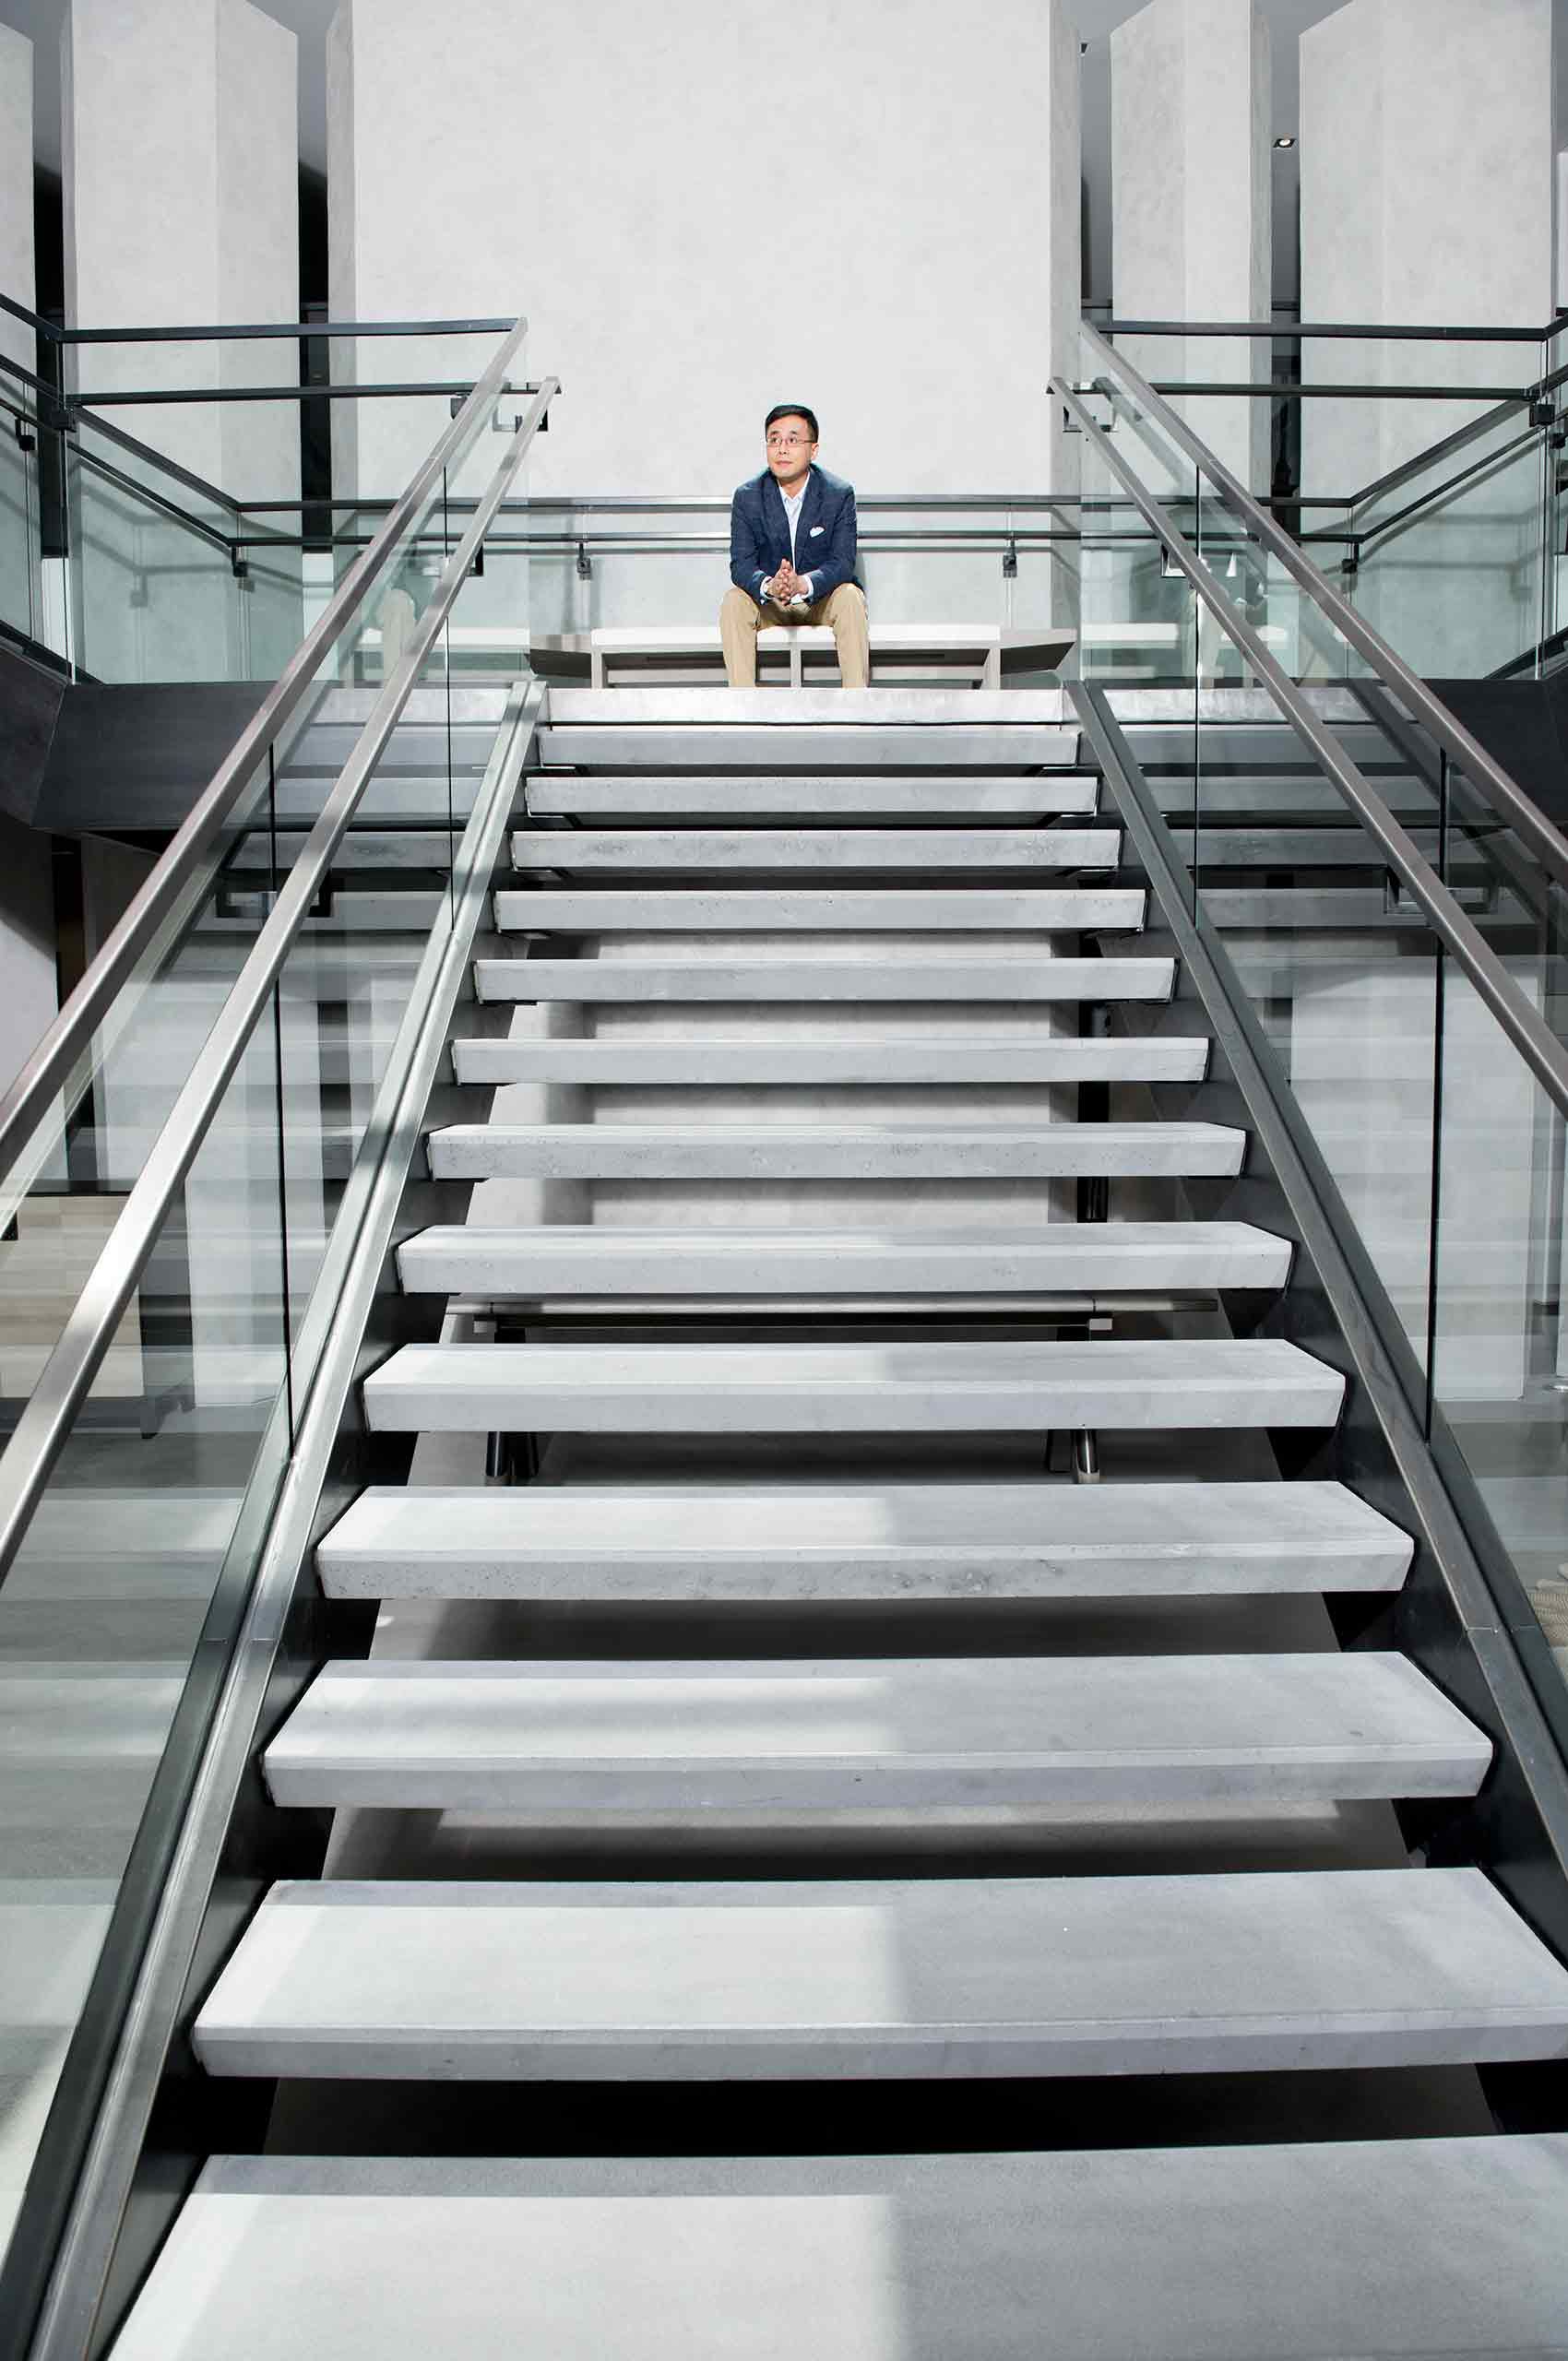 LiangChen-staircase-by-HenrikOlundPhotography.jpg